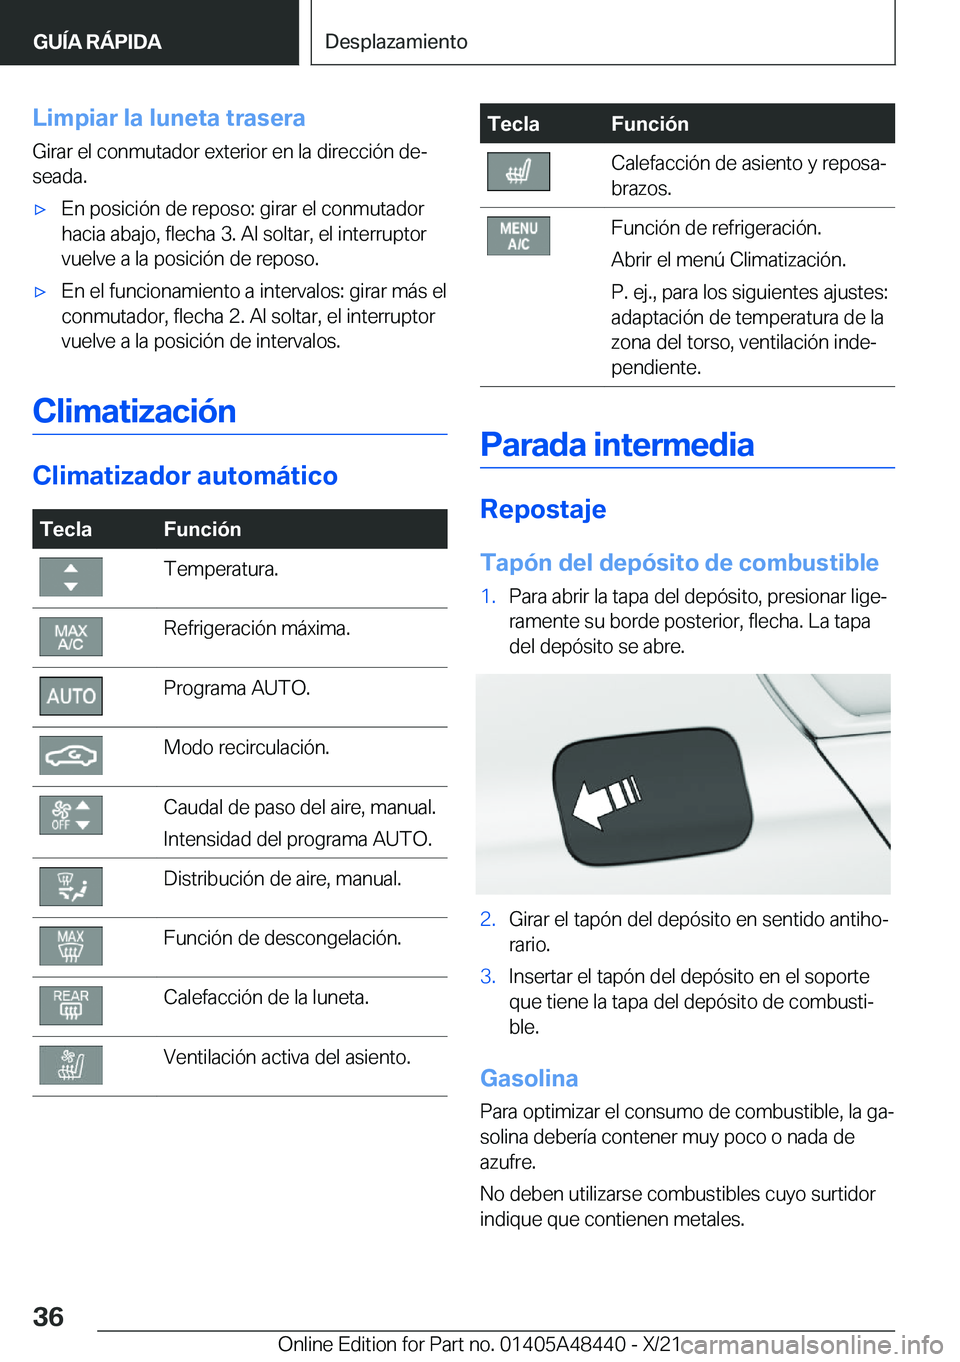 BMW X7 2022  Manuales de Empleo (in Spanish) �L�i�m�p�i�a�r��l�a��l�u�n�e�t�a��t�r�a�s�e�r�a
�G�i�r�a�r��e�l��c�o�n�m�u�t�a�d�o�r��e�x�t�e�r�i�o�r��e�n��l�a��d�i�r�e�c�c�i�